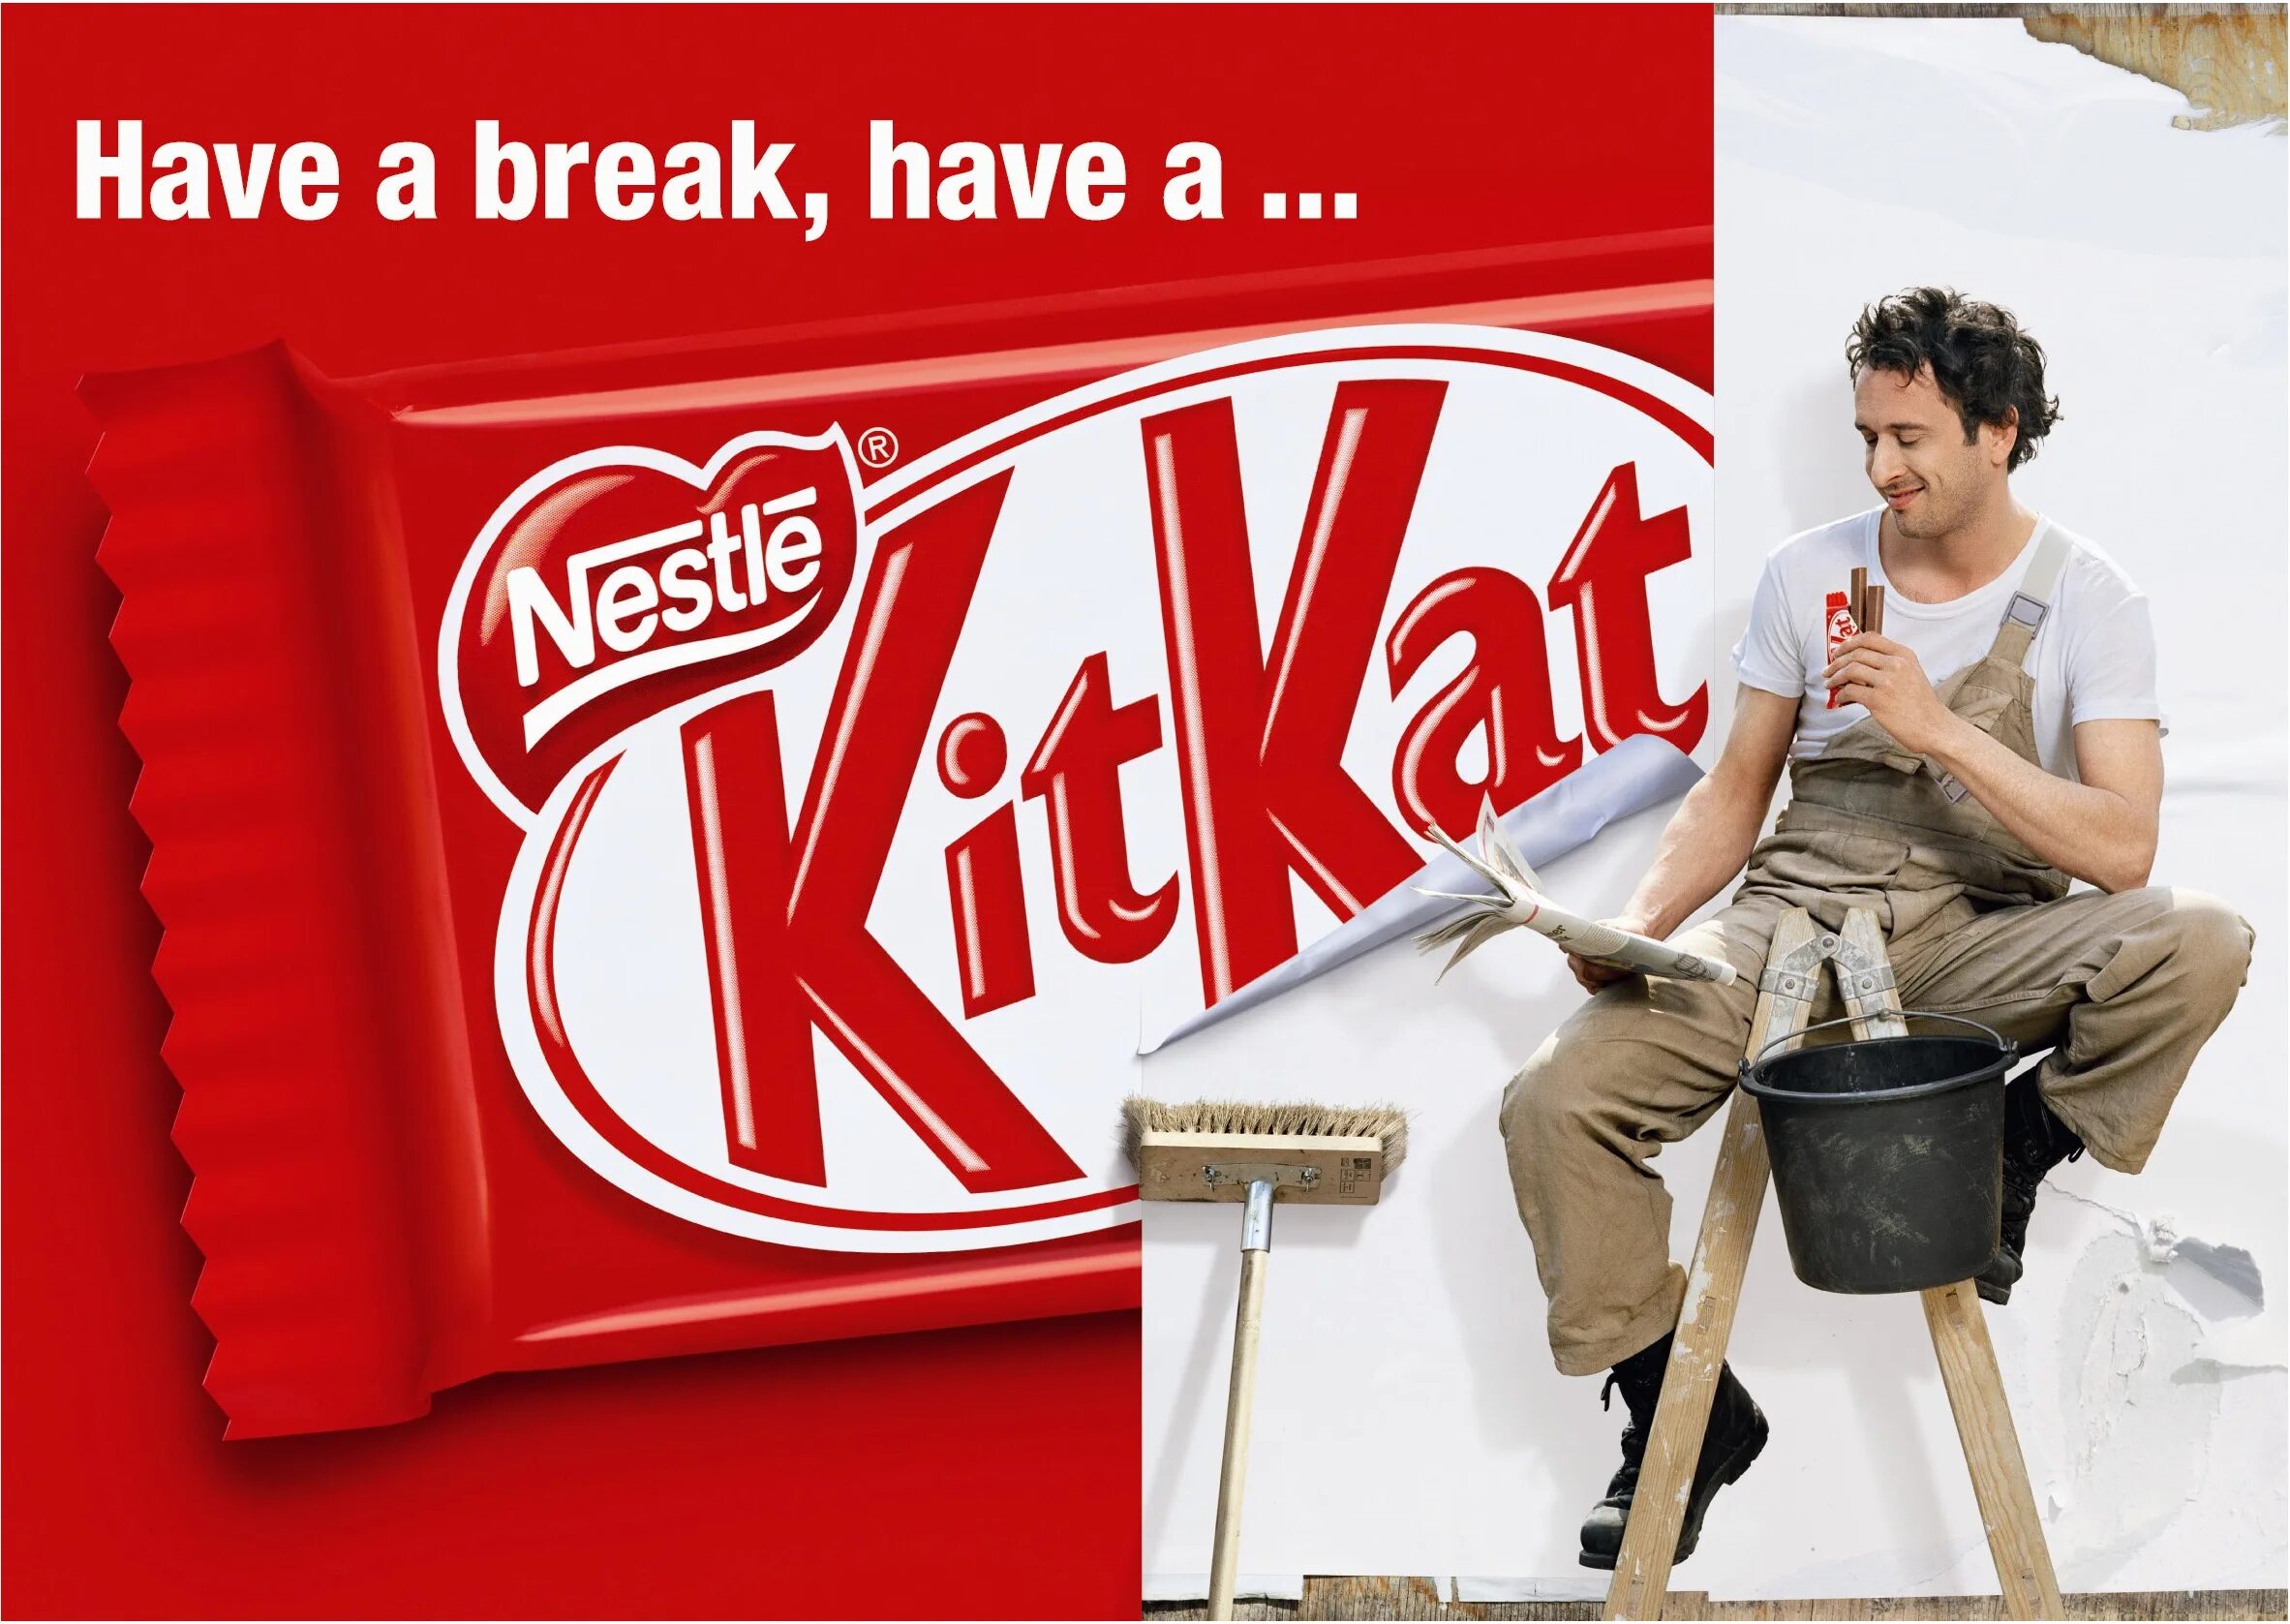 All the best different. Английские слоганы в рекламе. Рекламные плакаты Kitkat. Слоган кит кат. Реклама кит кат.